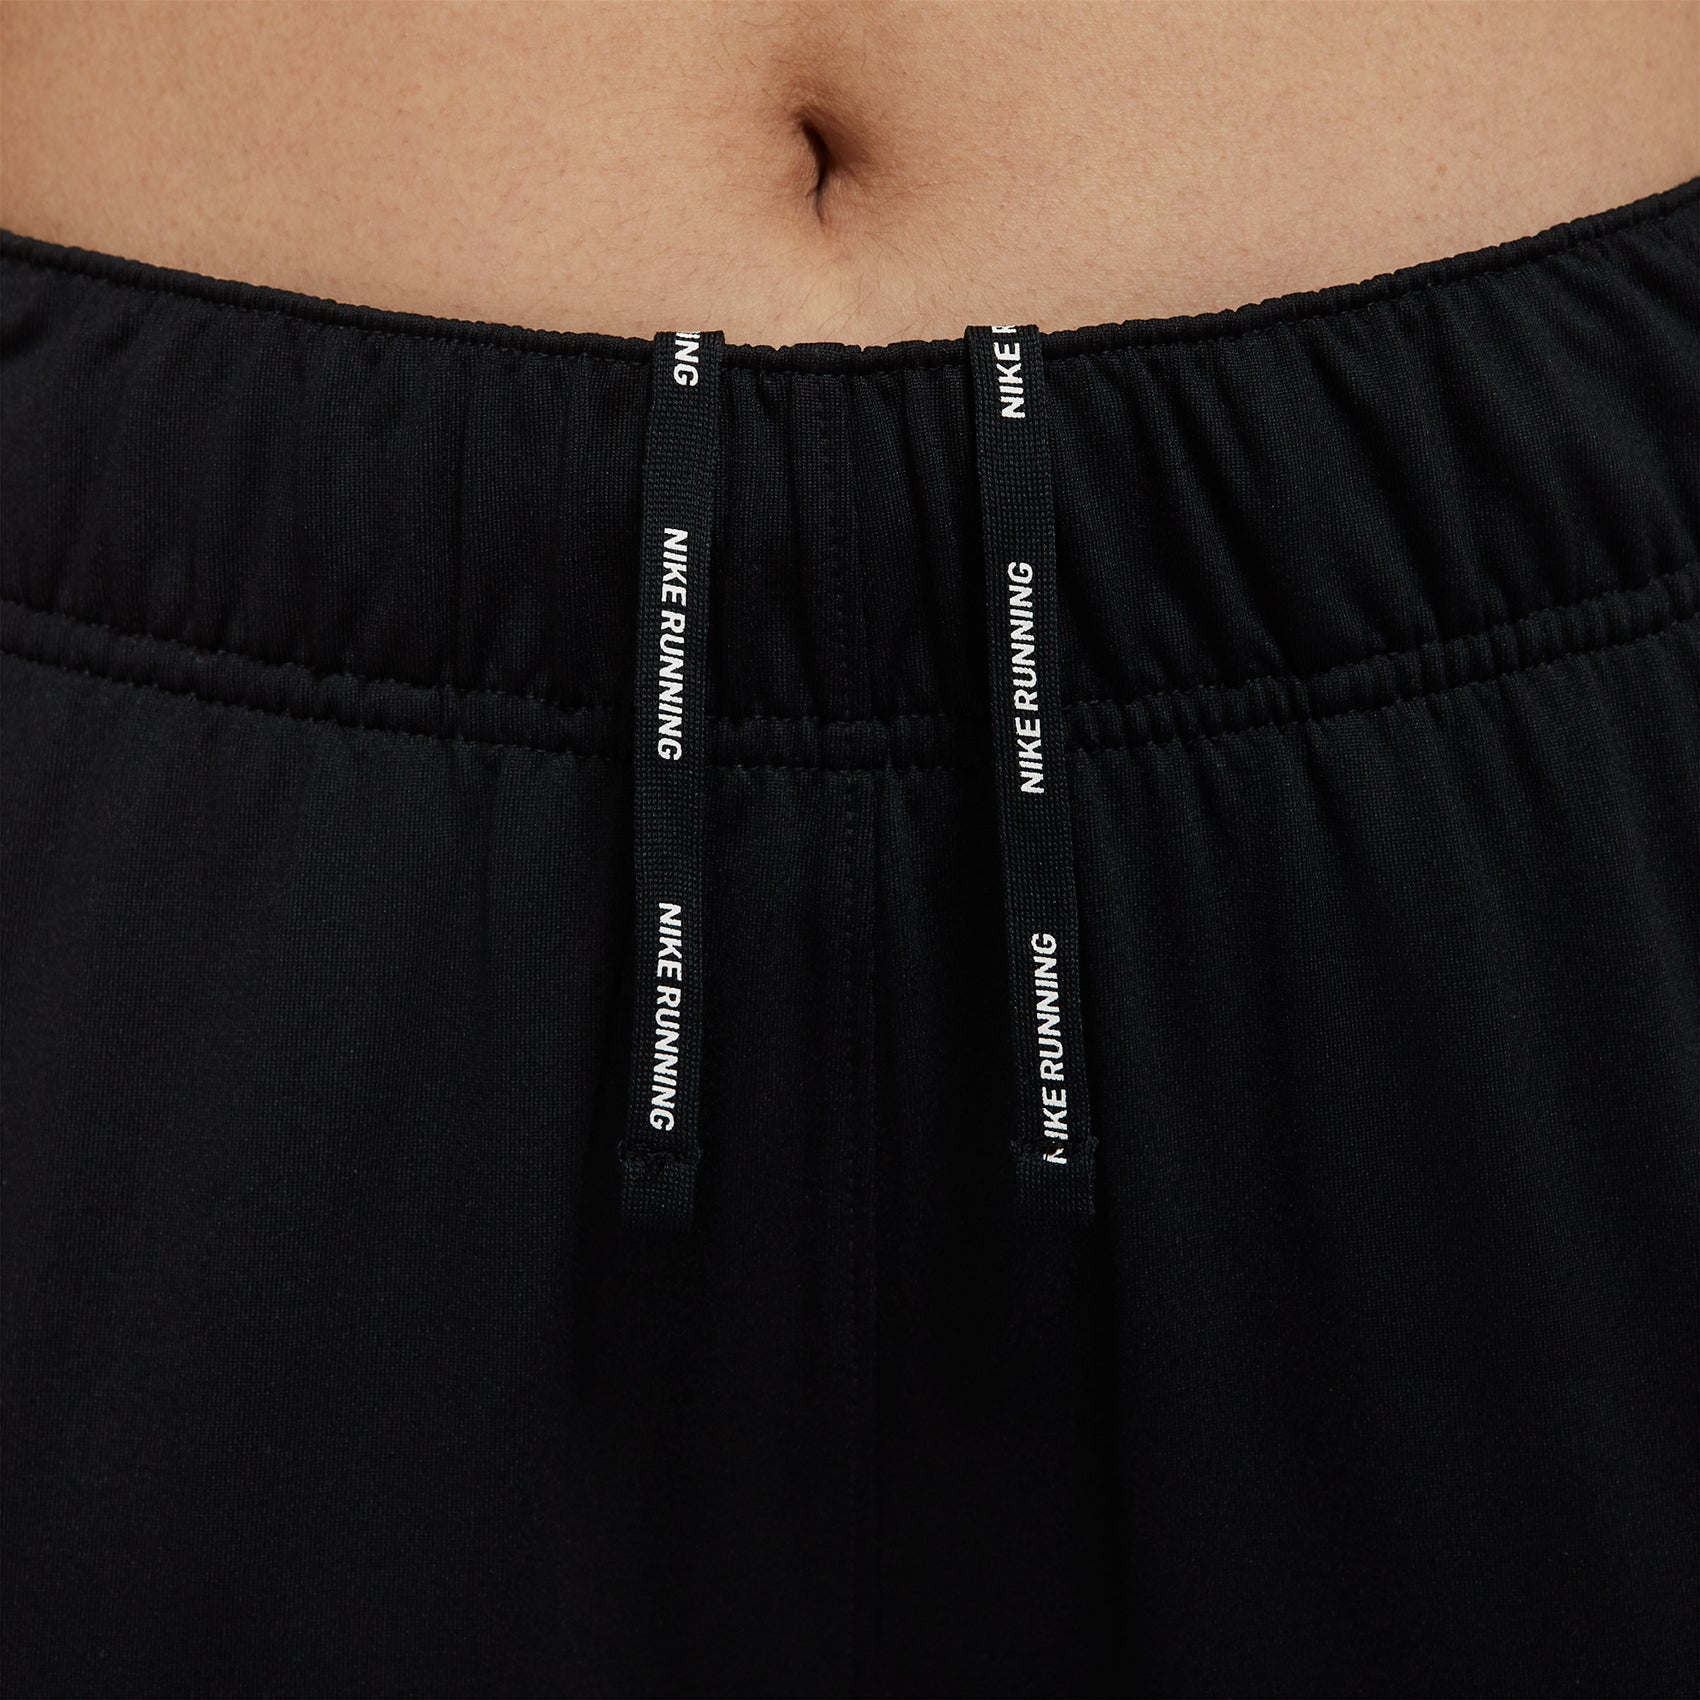 Nike Dri-FIT Essential Women's Running Trousers